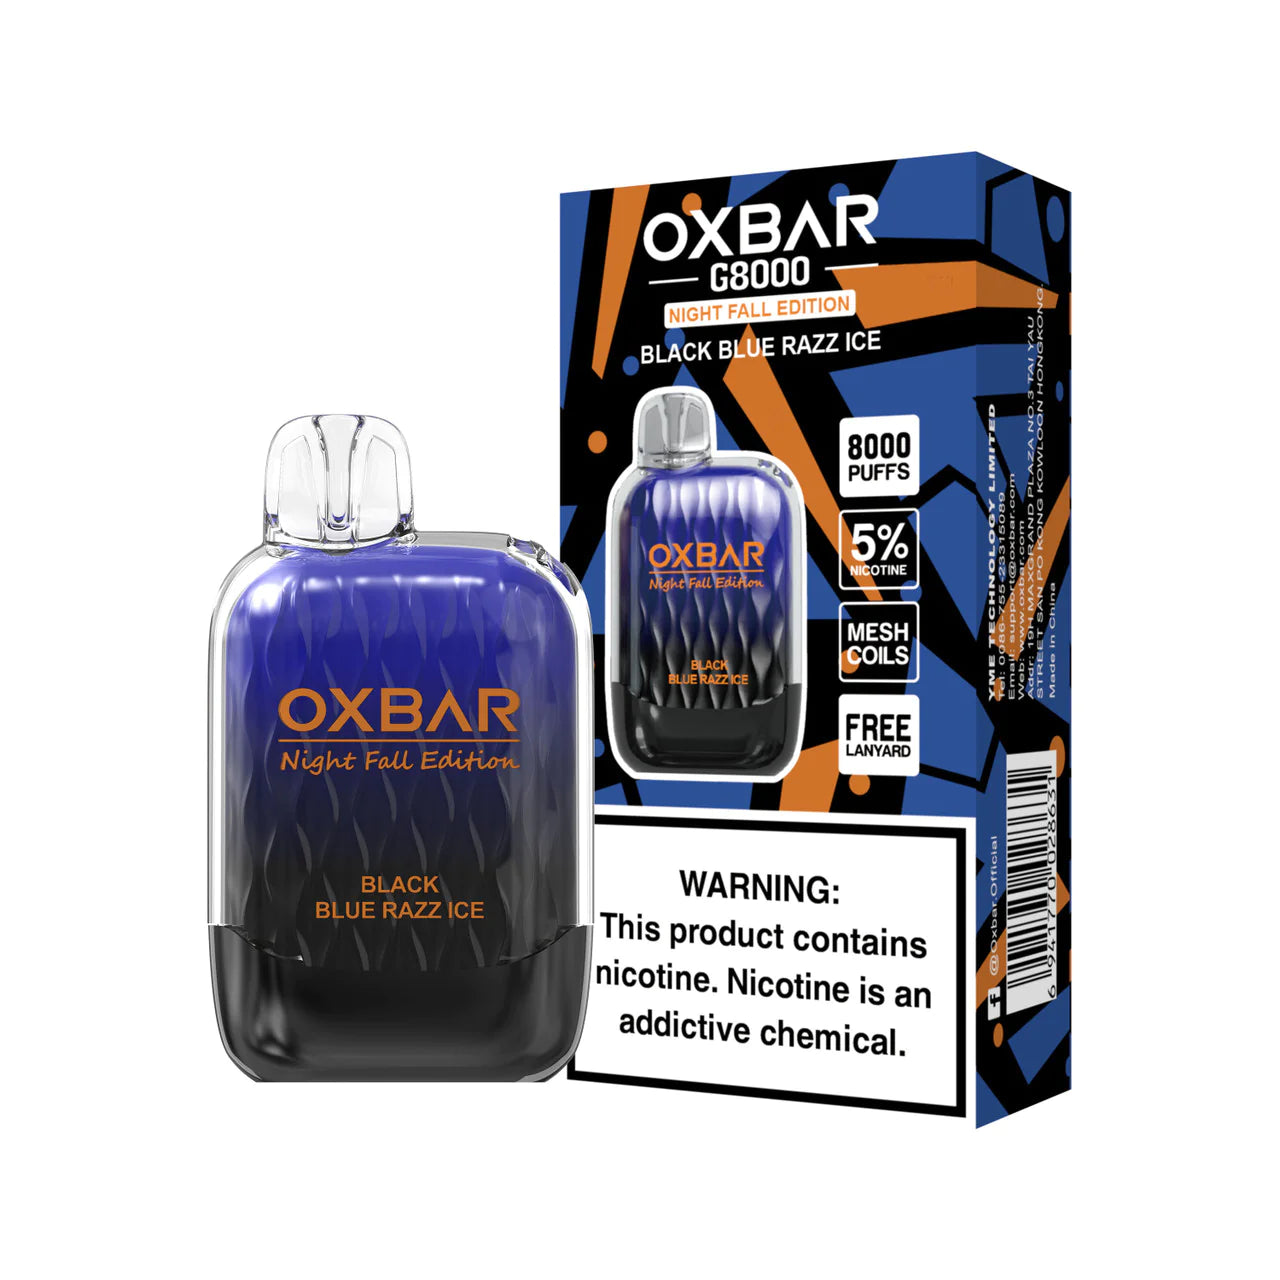 Black-Blue-Razz-Ice-OXBAR-G8000-1280x1280-WEBP